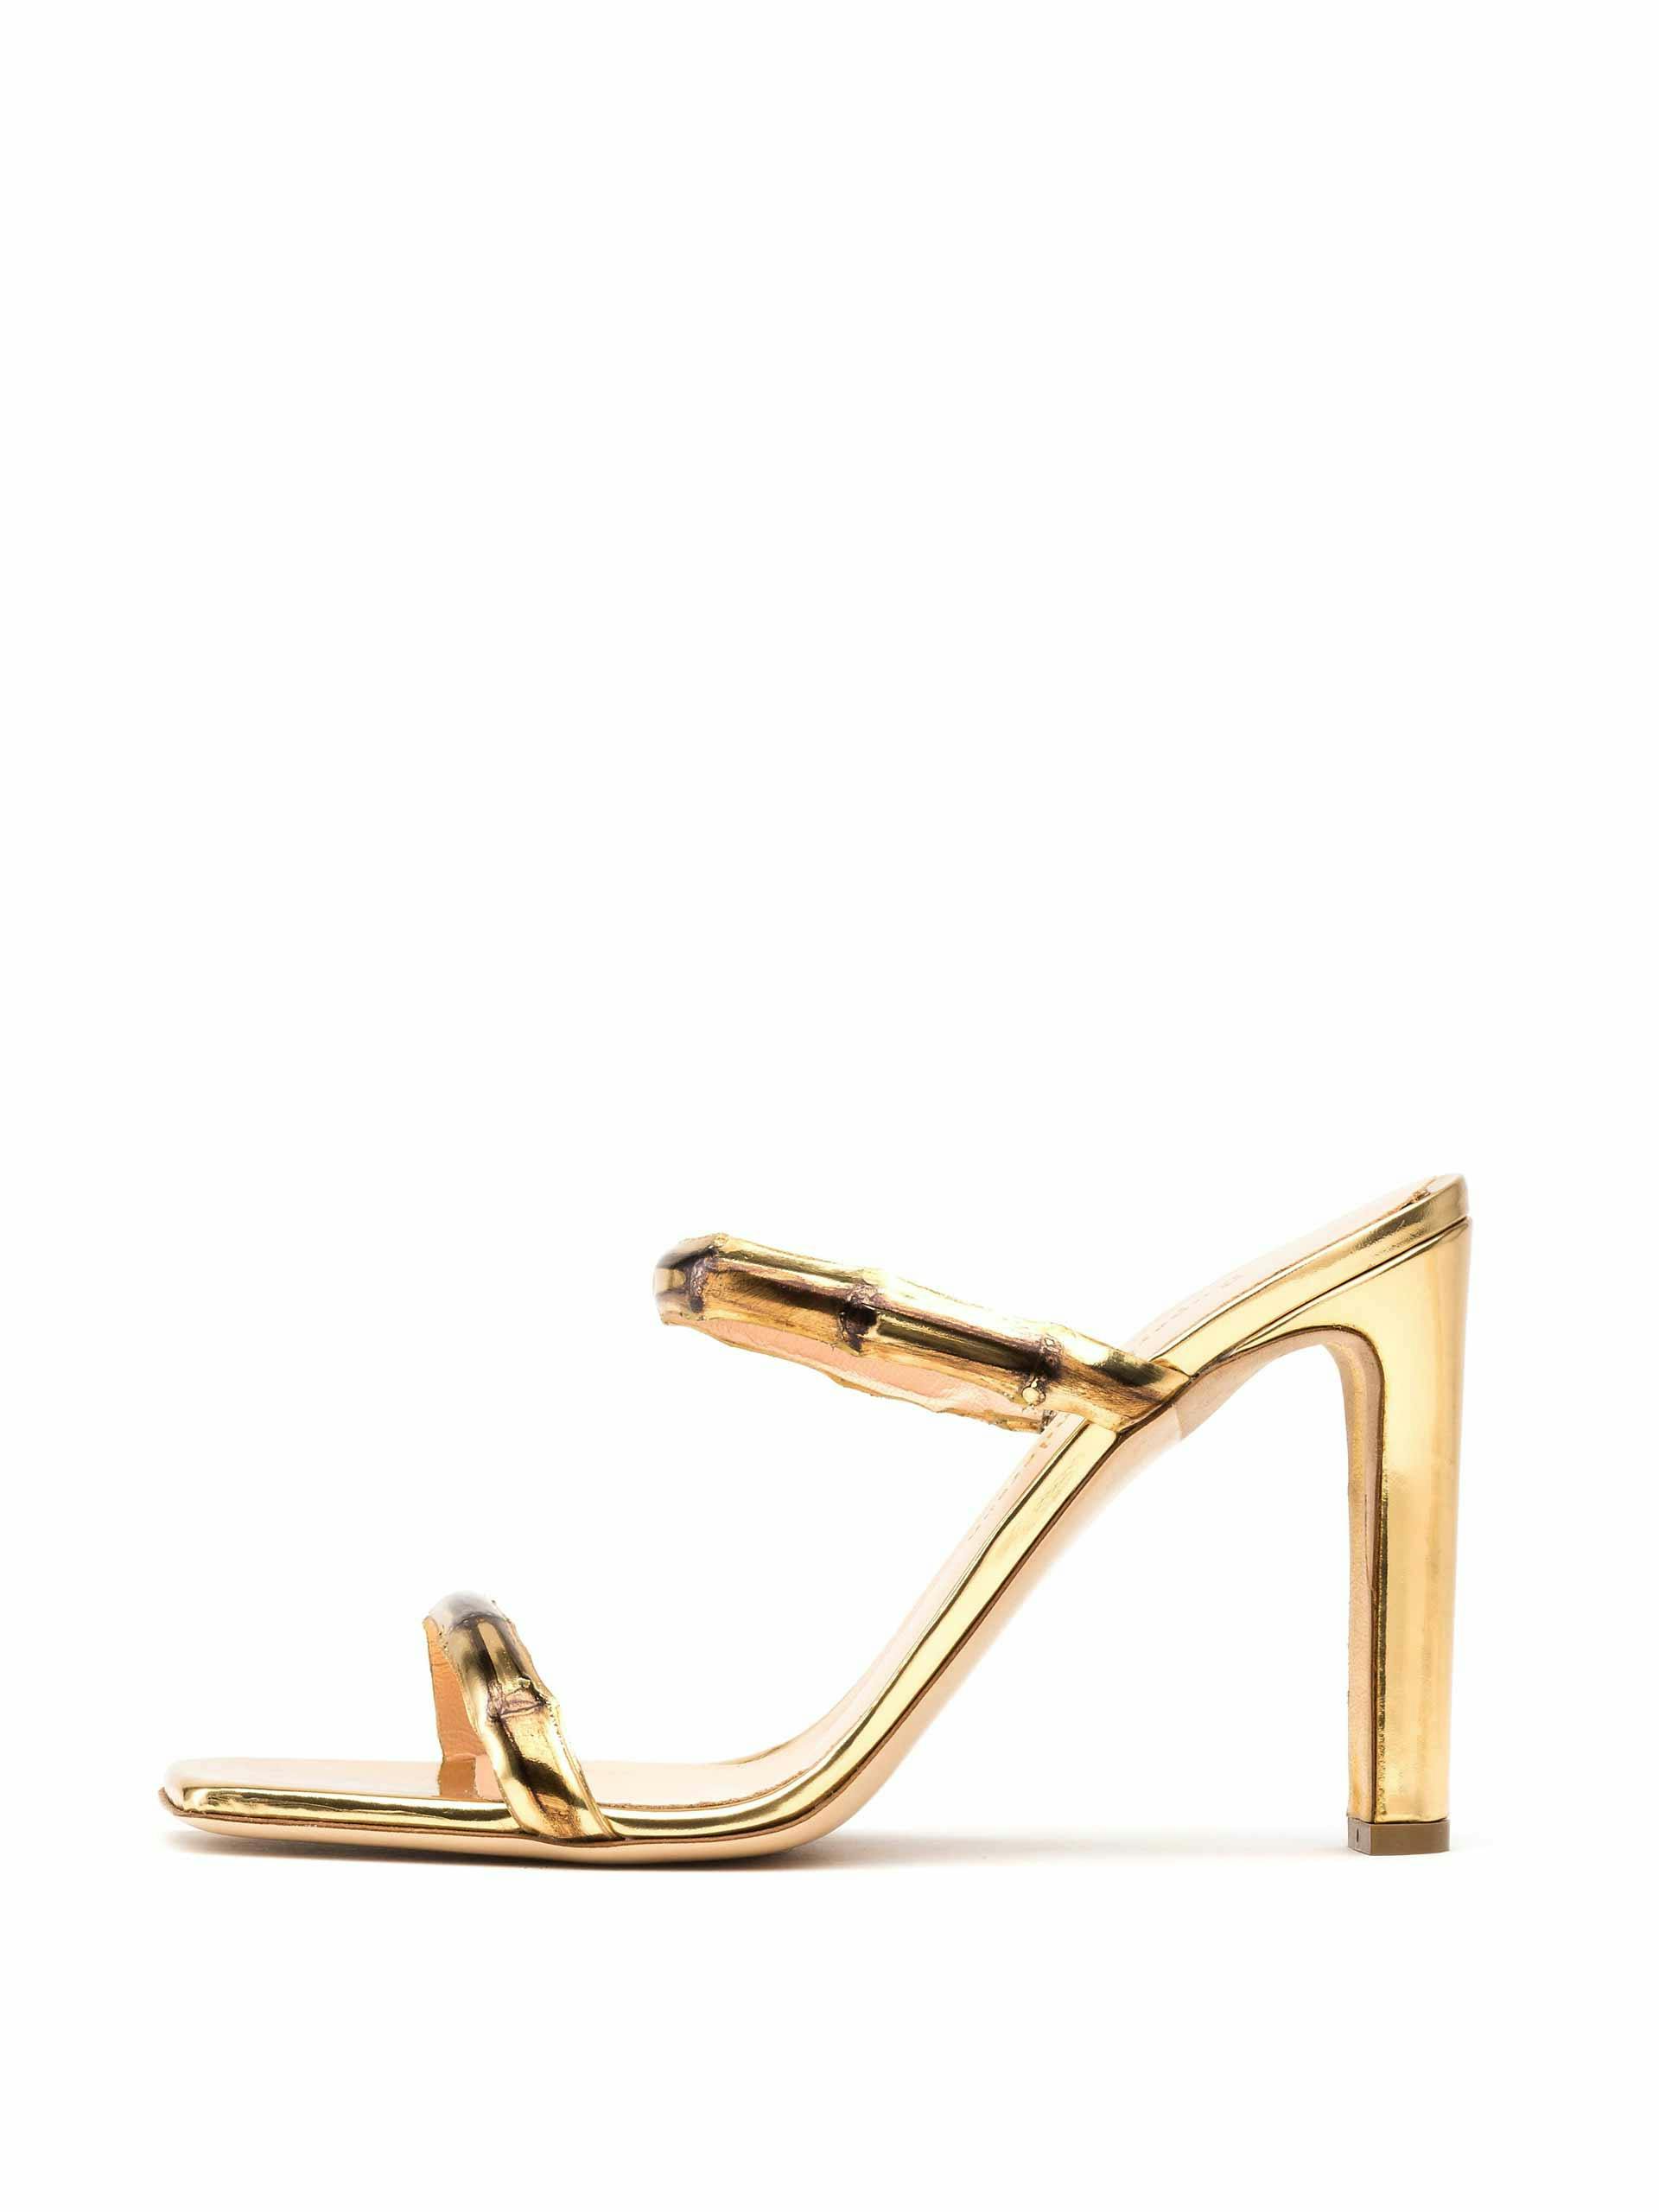 Stromboli gold heeled sandals